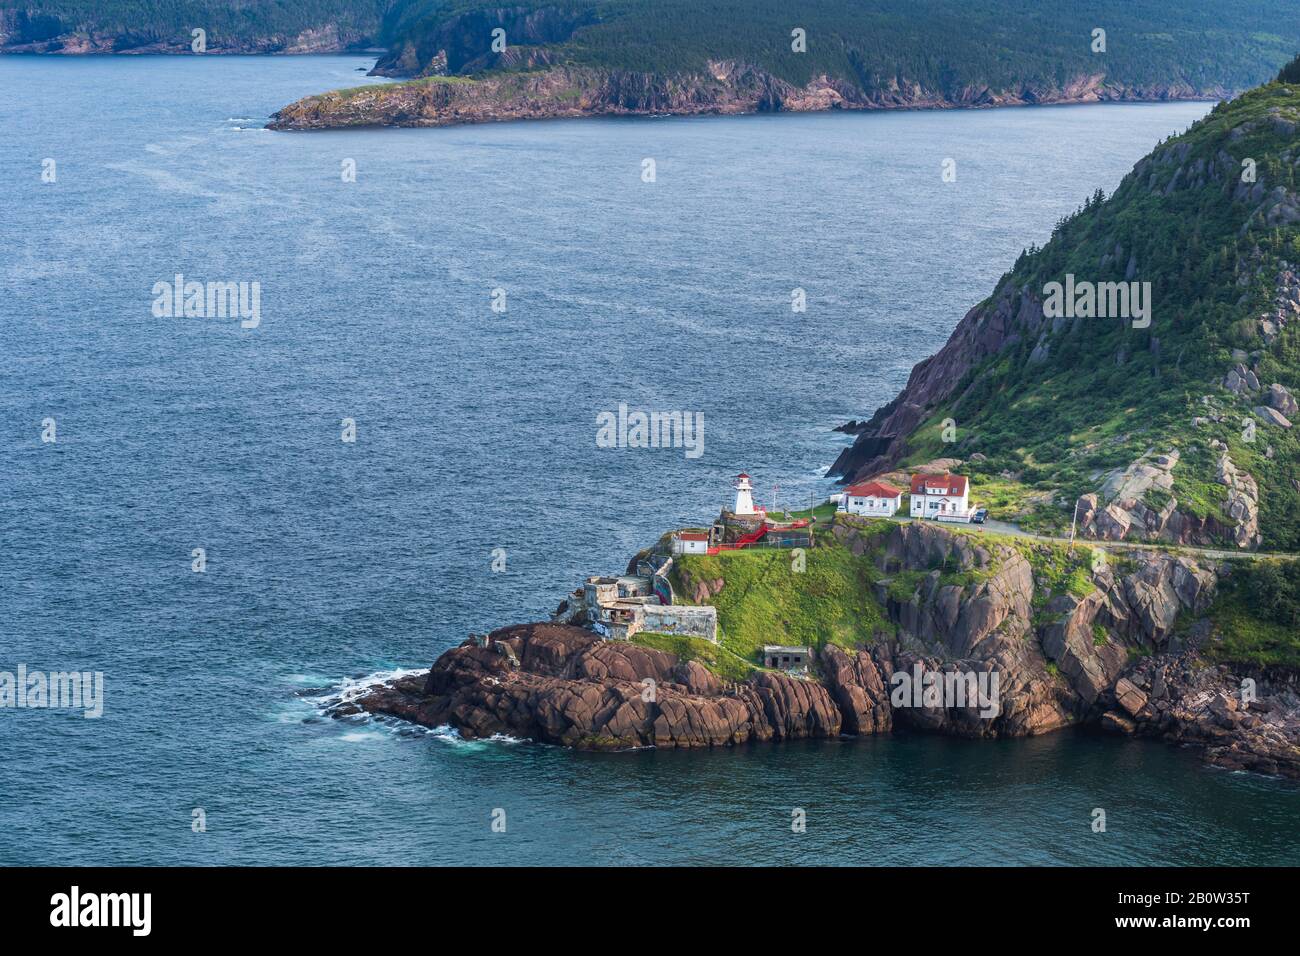 Fort Amherst Lighthouse, near St Johns, Newfoundland, Canada Stock Photo